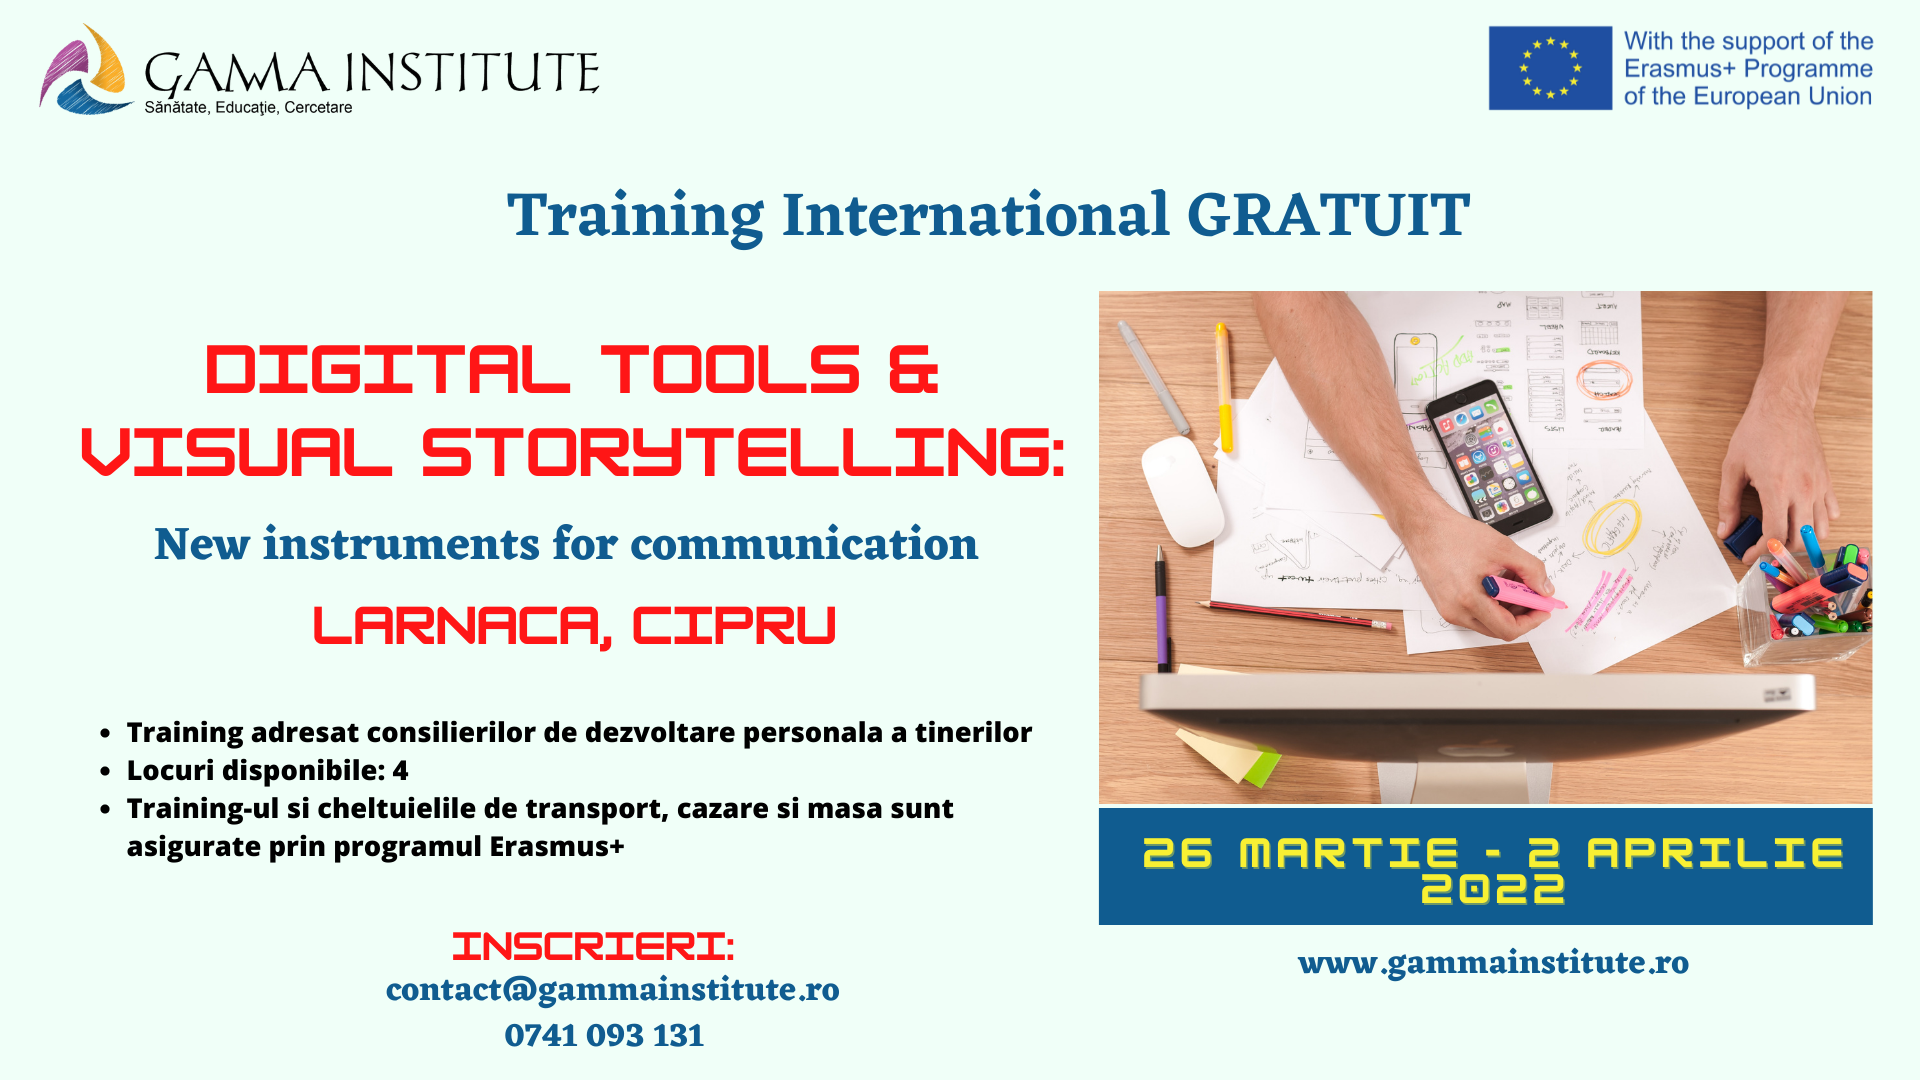 digital_tools_training_international_gratuit_1_0.png